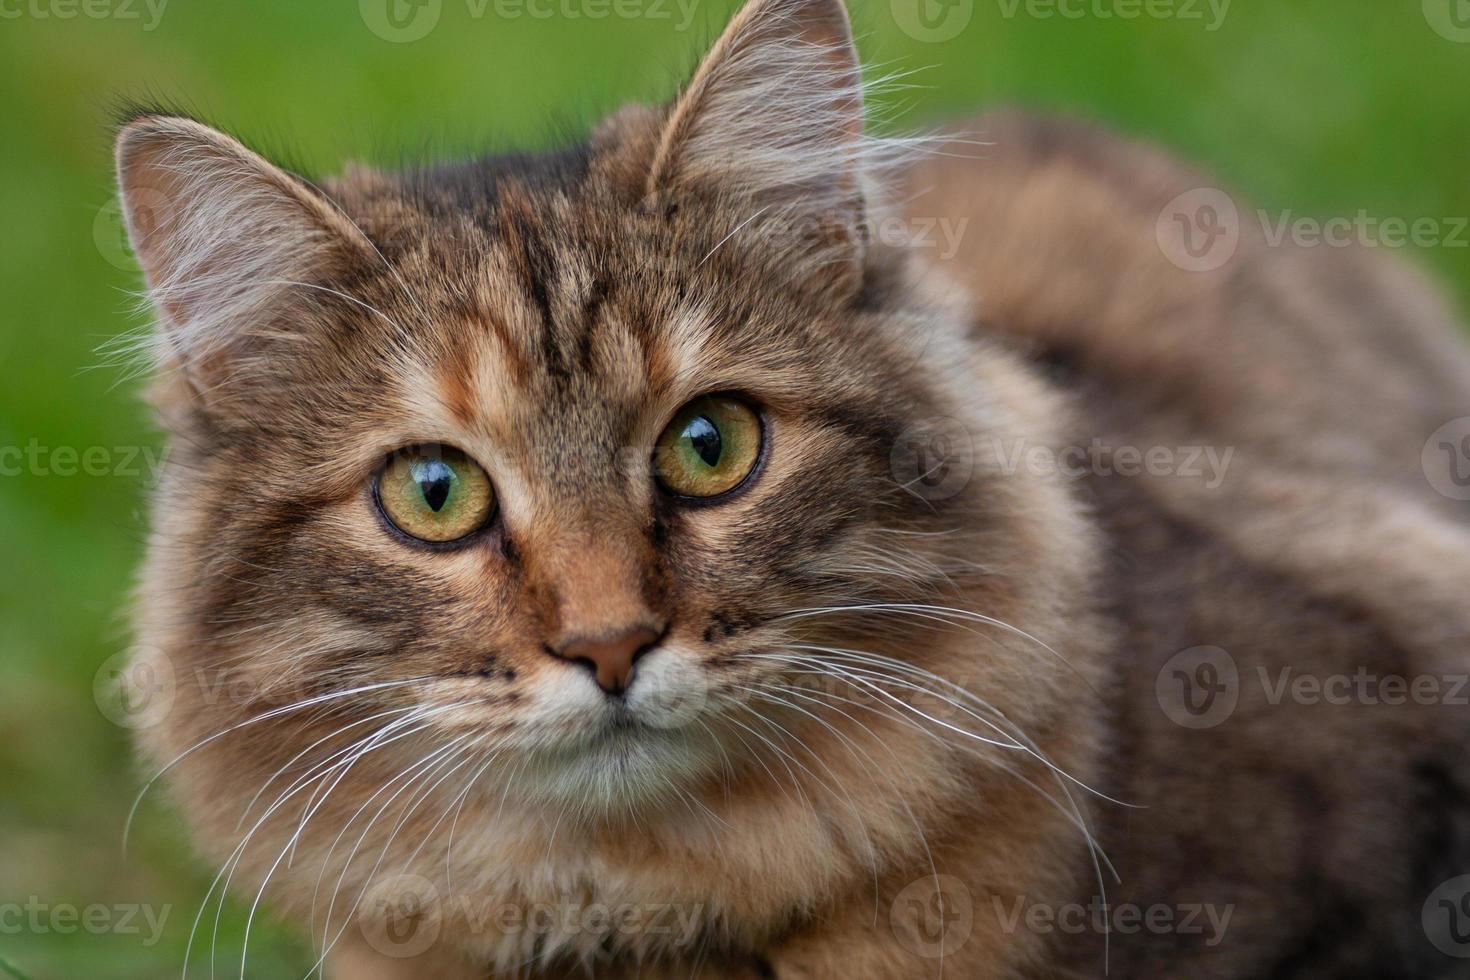 close-up portrait of a beautiful cat photo